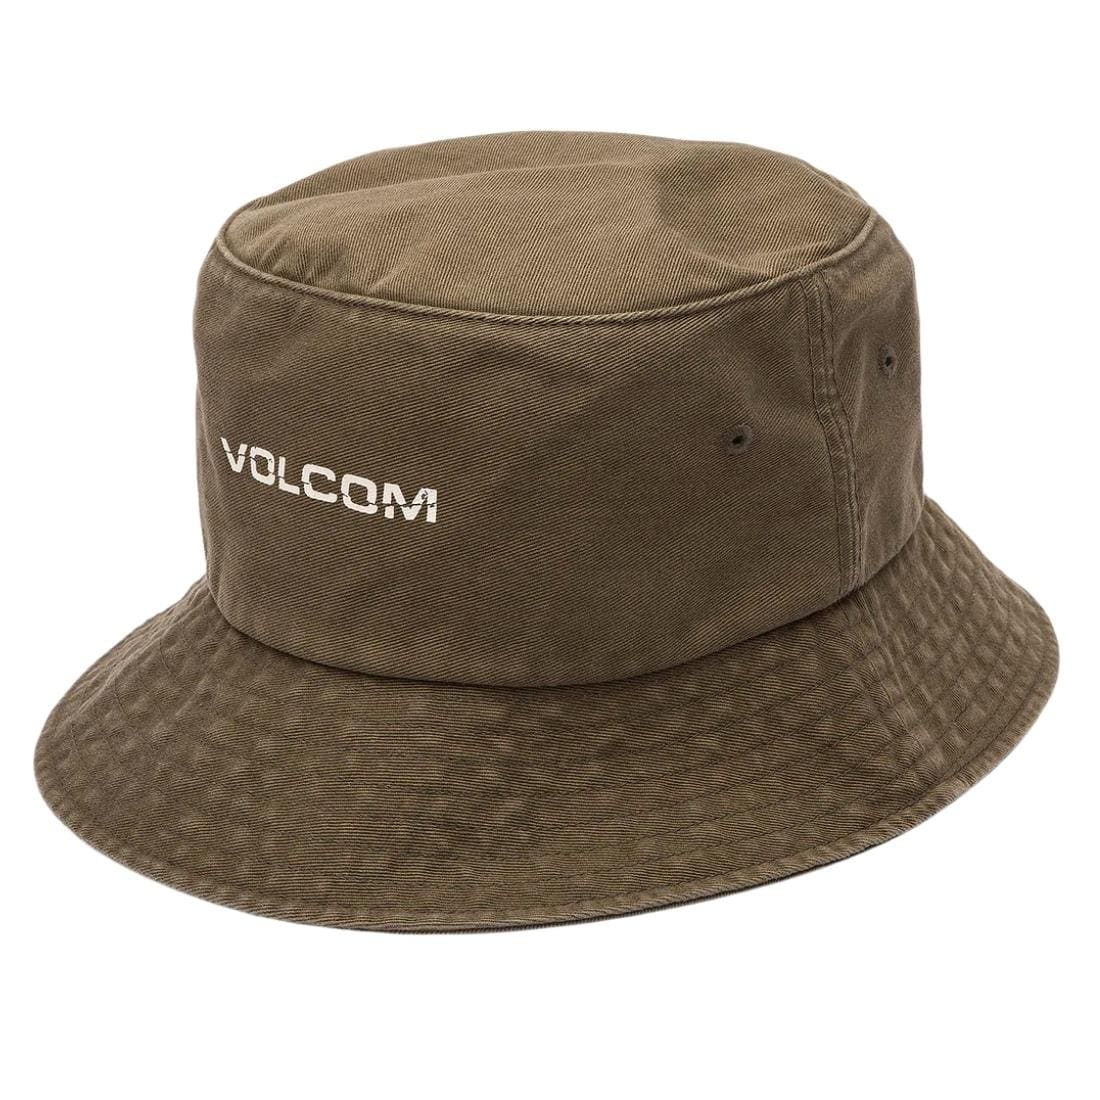 Volcom Minimalistism Bucket Hat - Service Green - Bucket Hat by Volcom